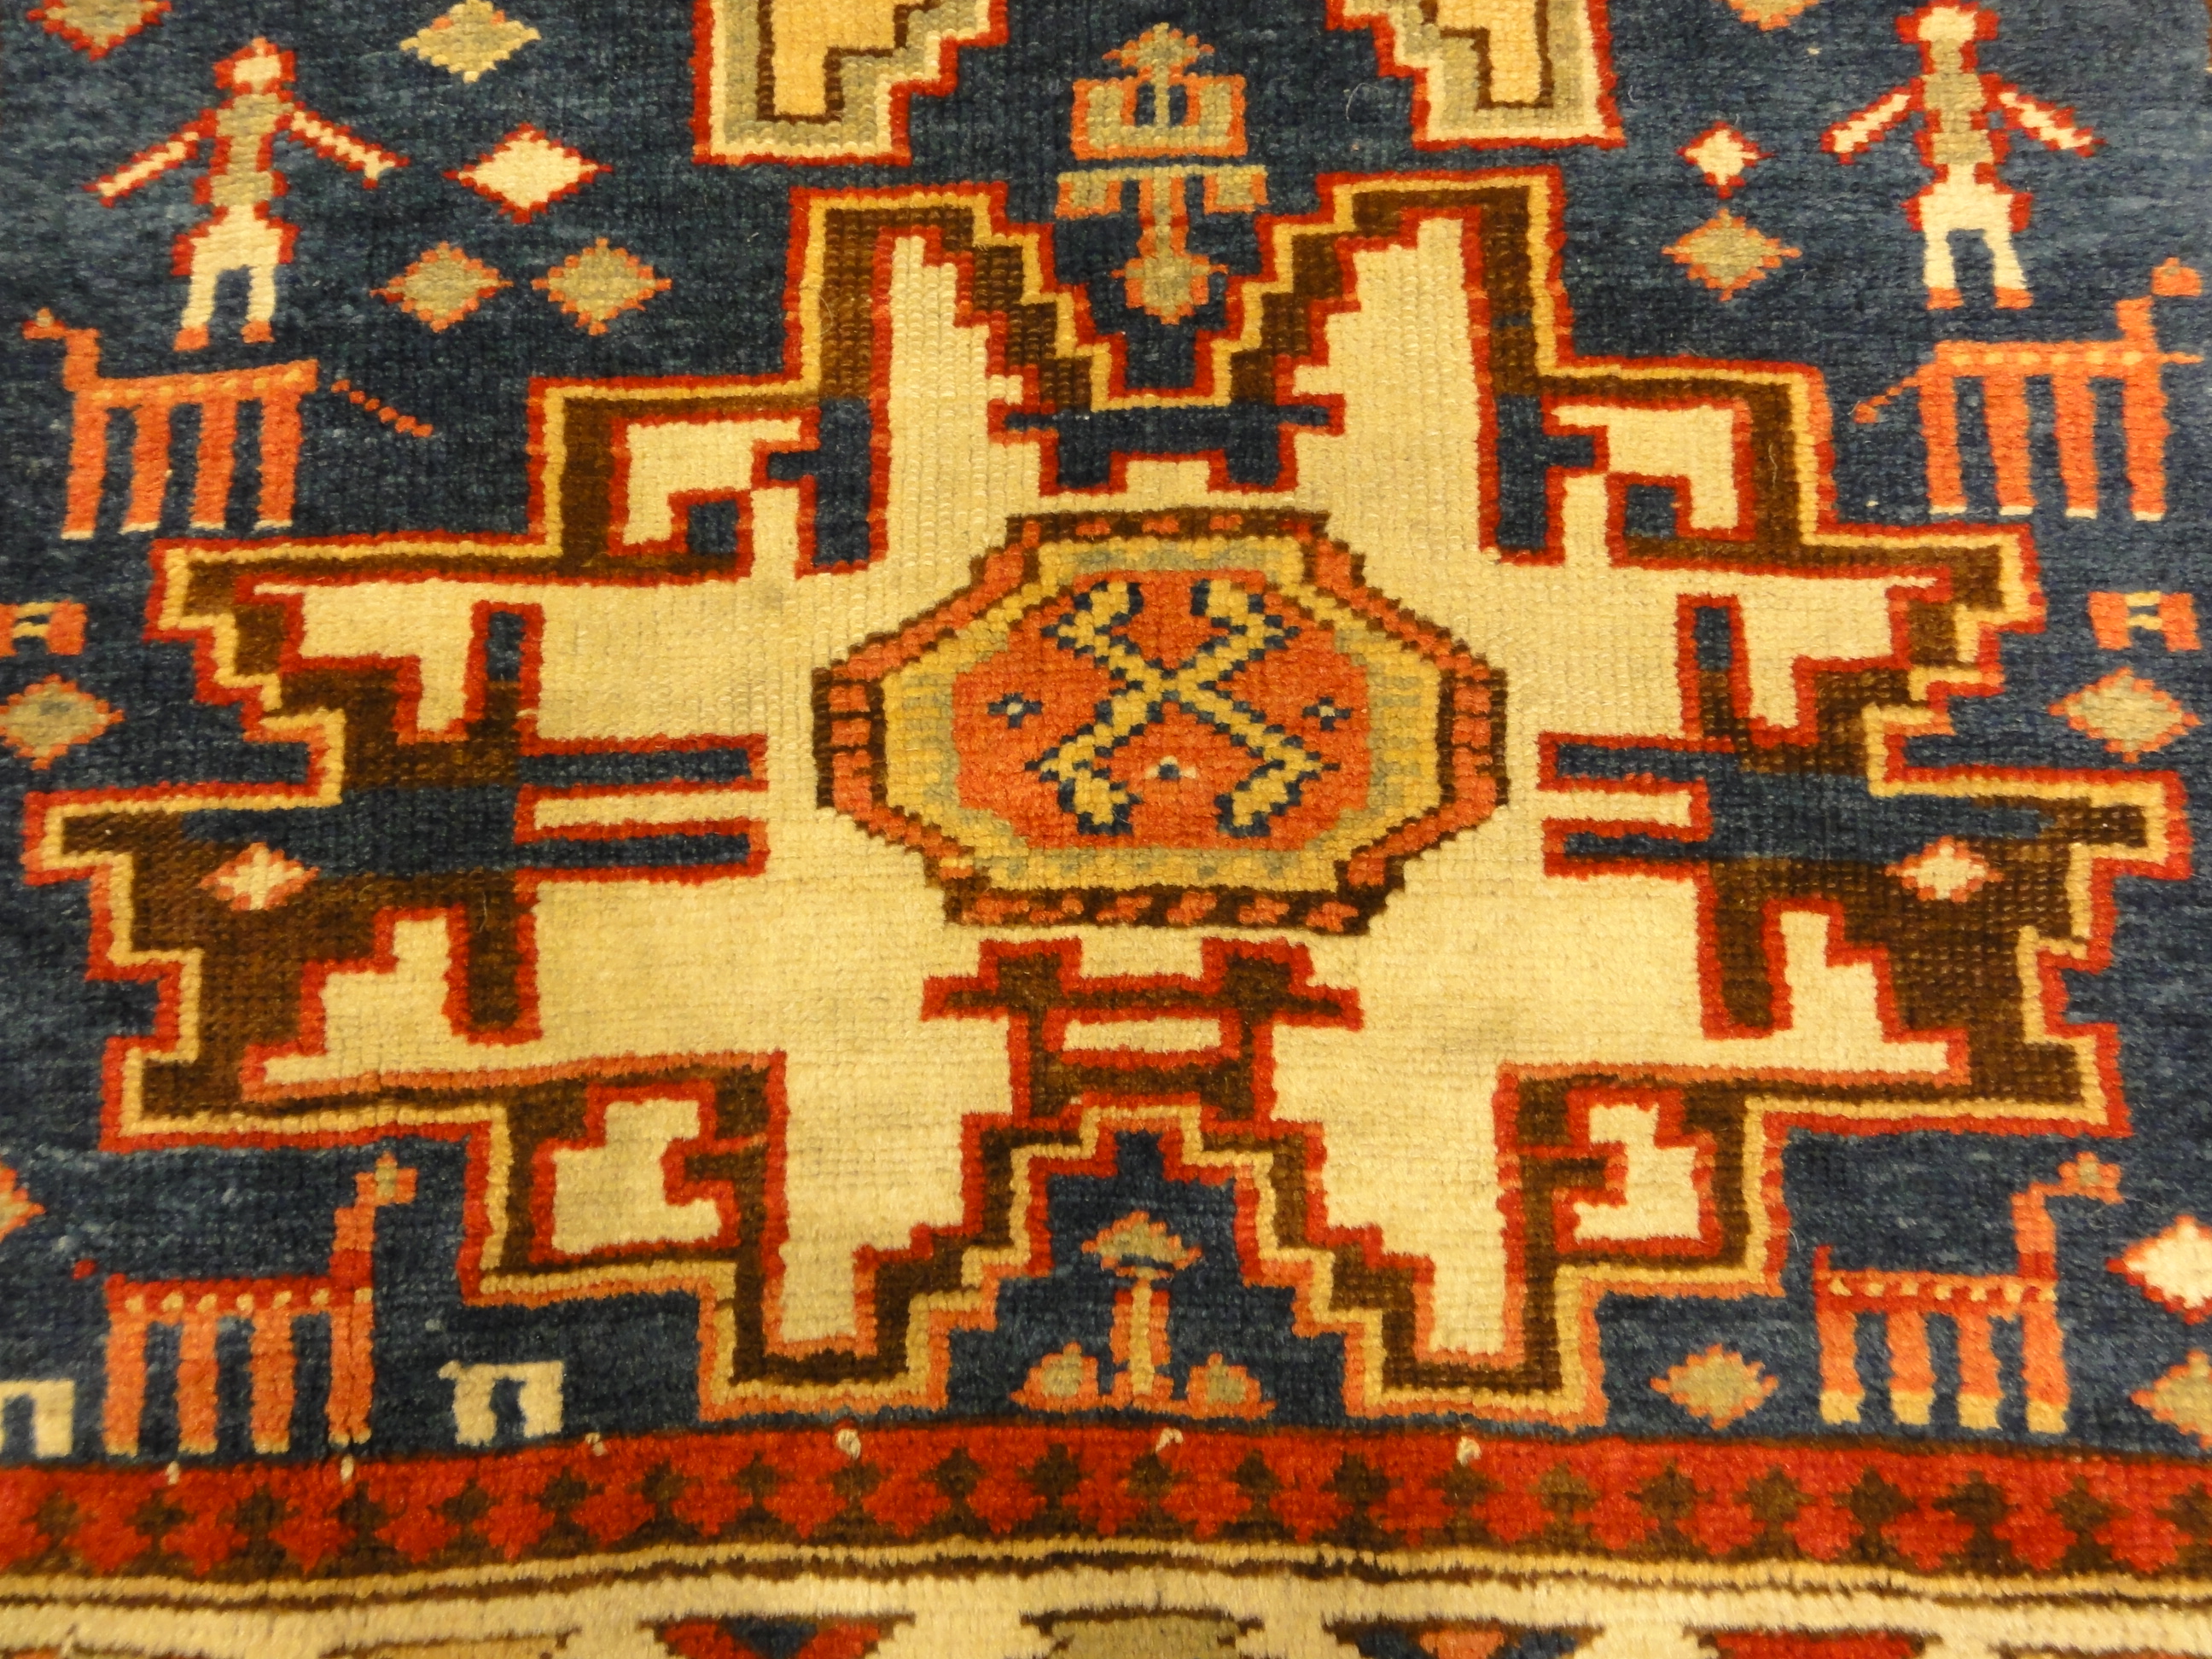 Rare Antique Leshgi Star Rug featuring Men Standing on Horses. A piece of genuine antique authentic woven carpet art sold by Santa Barbara Design Center.